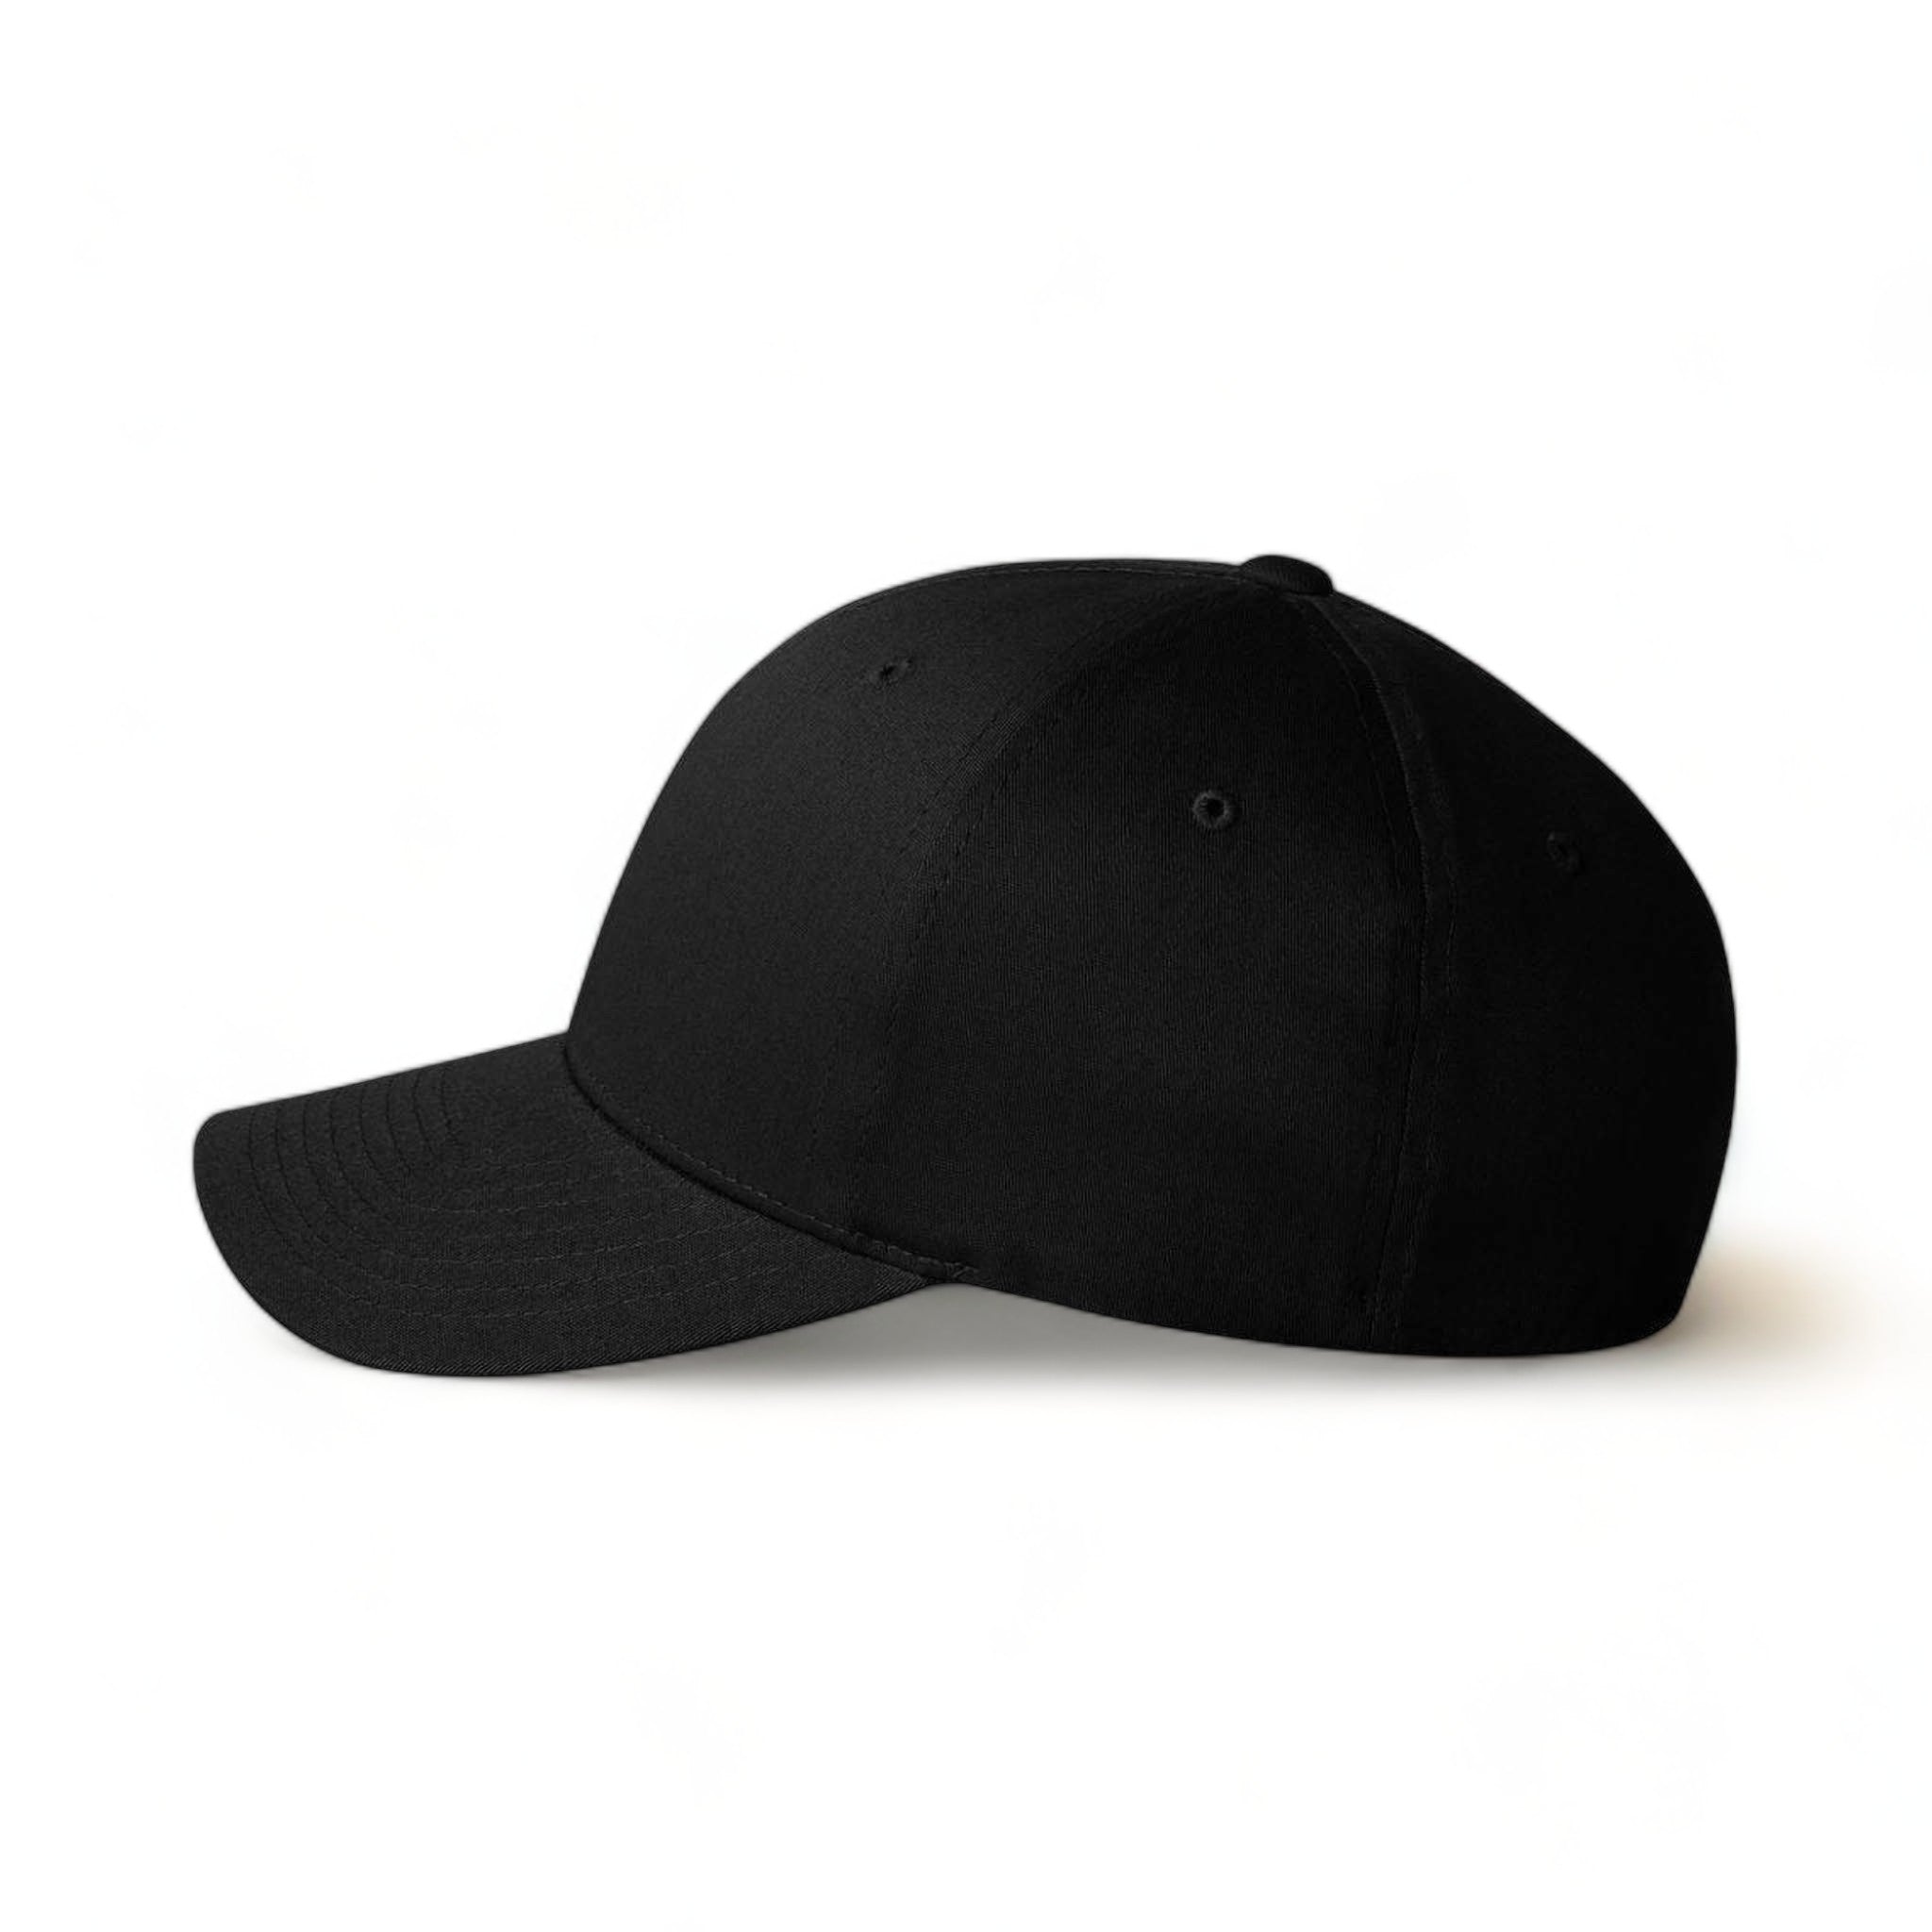 Side view of Flexfit 5001 custom hat in black